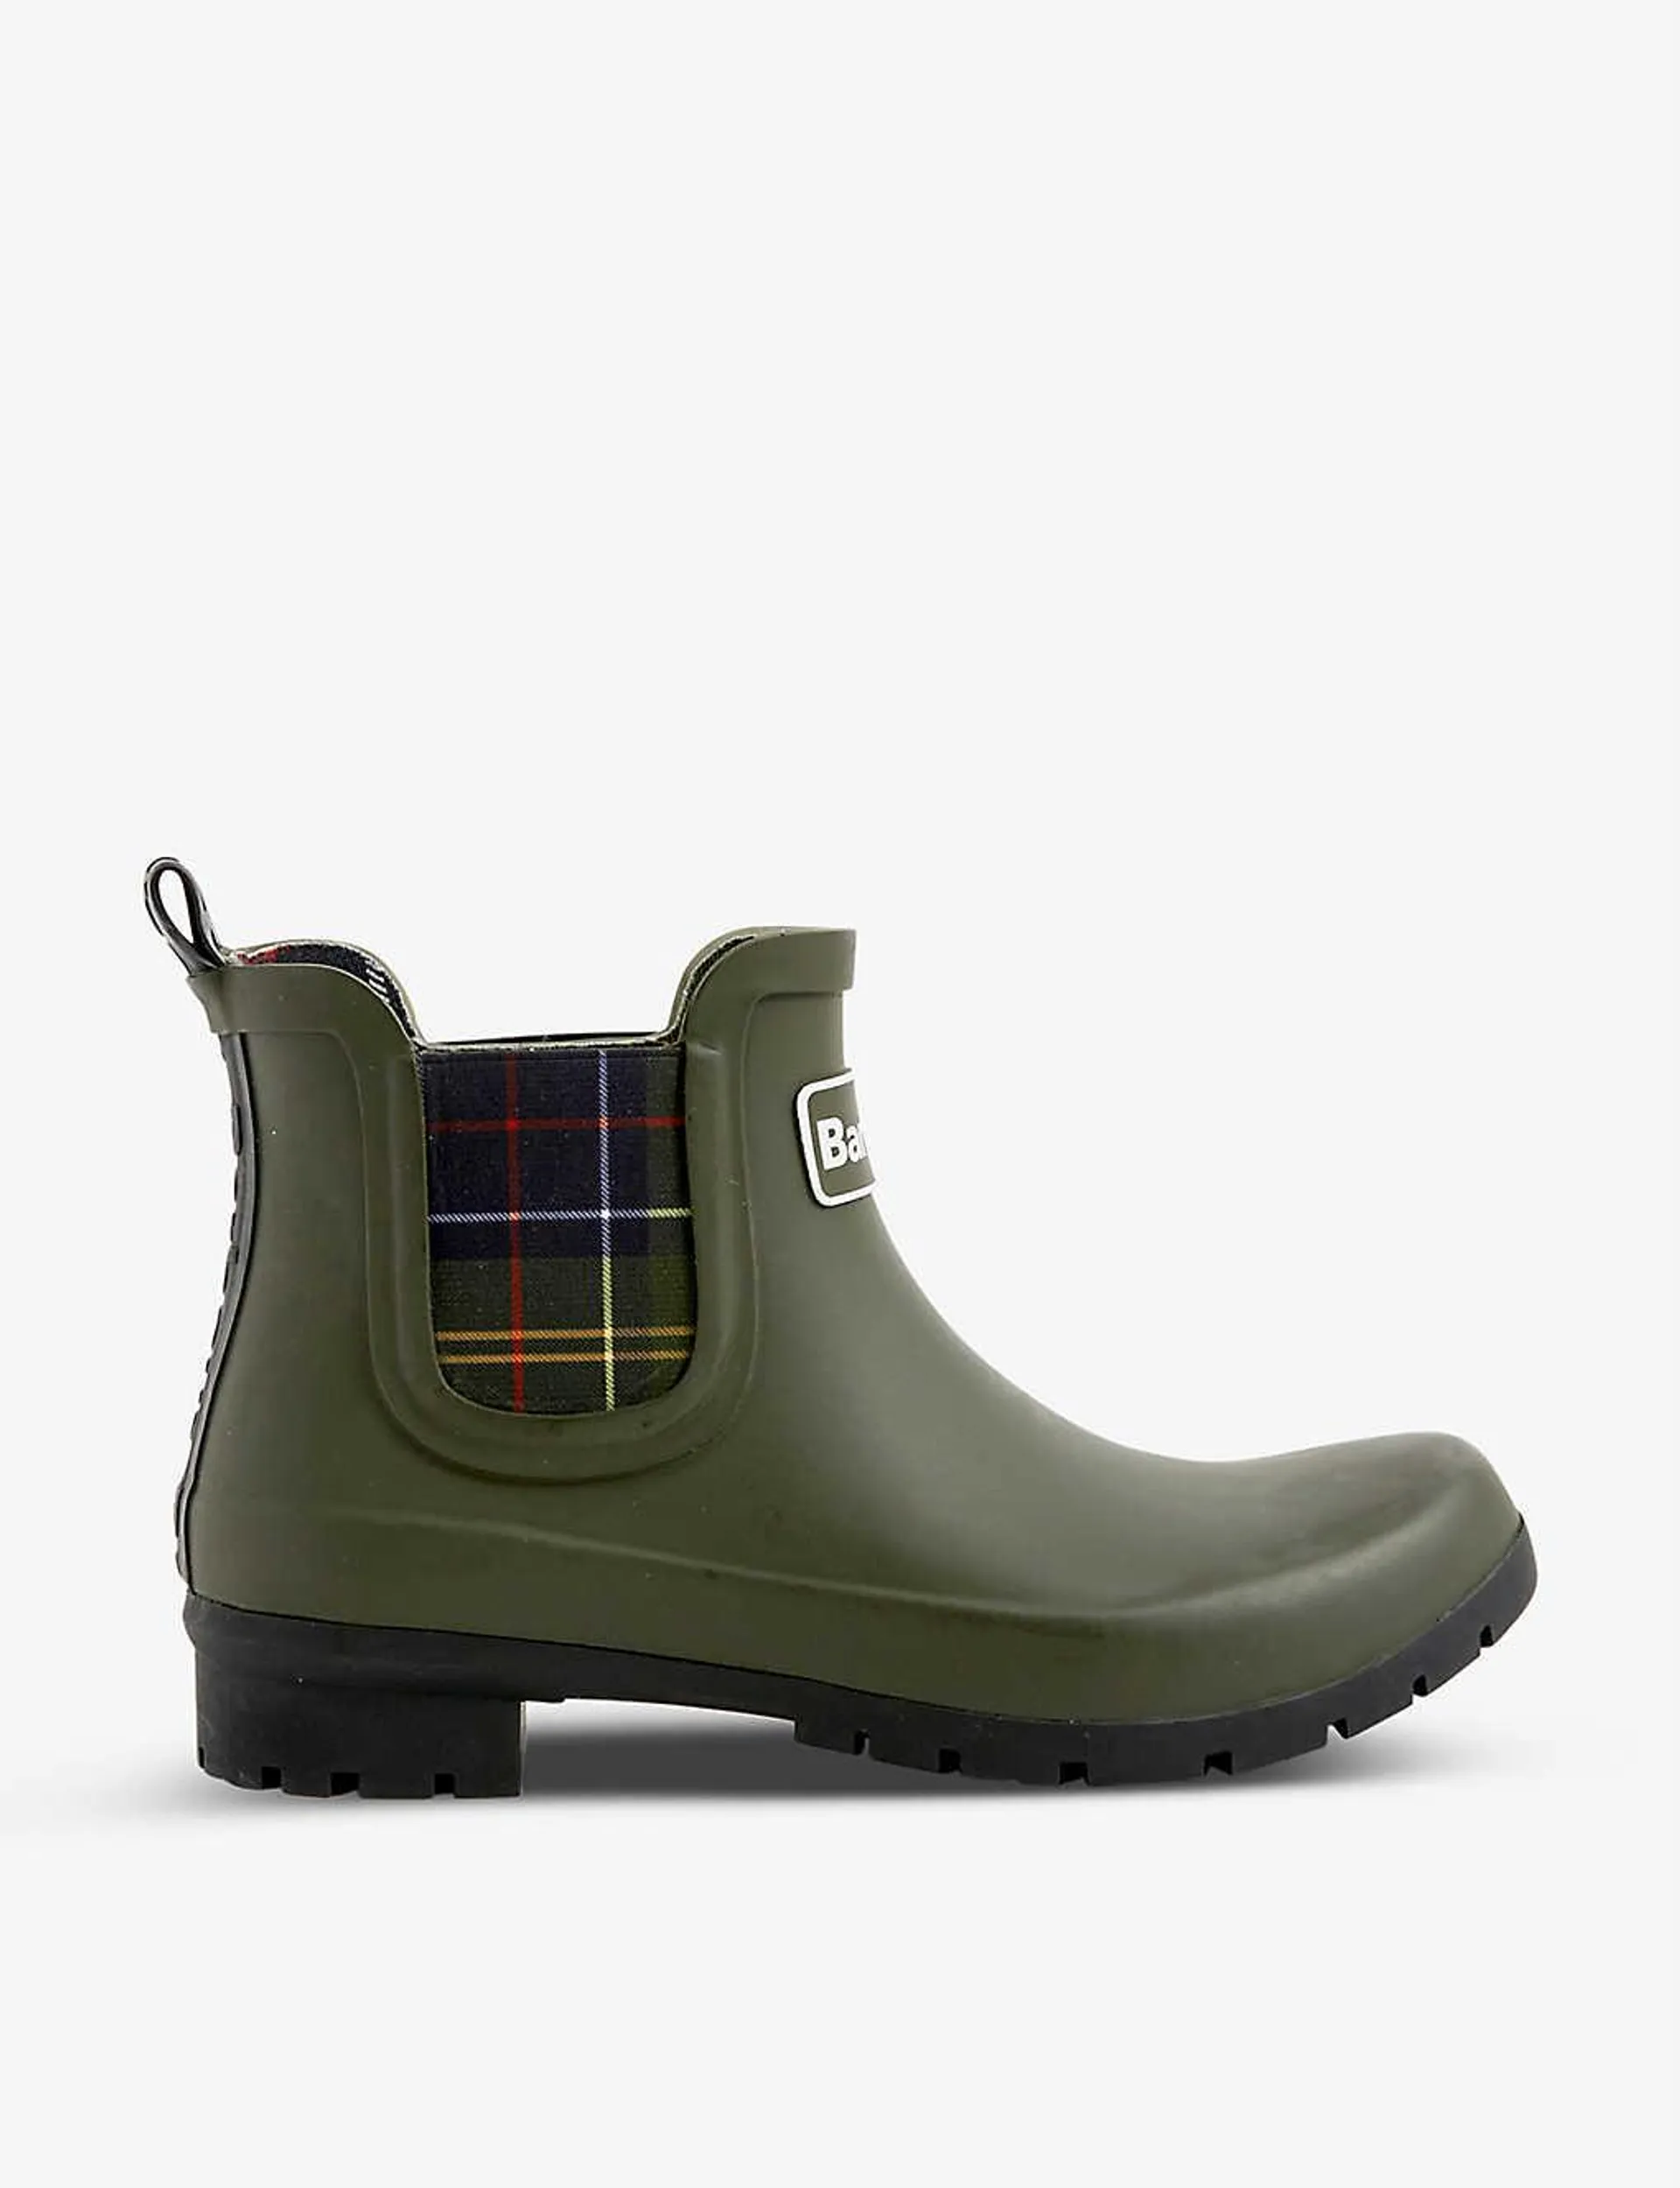 Kingham branded rubber wellington boots